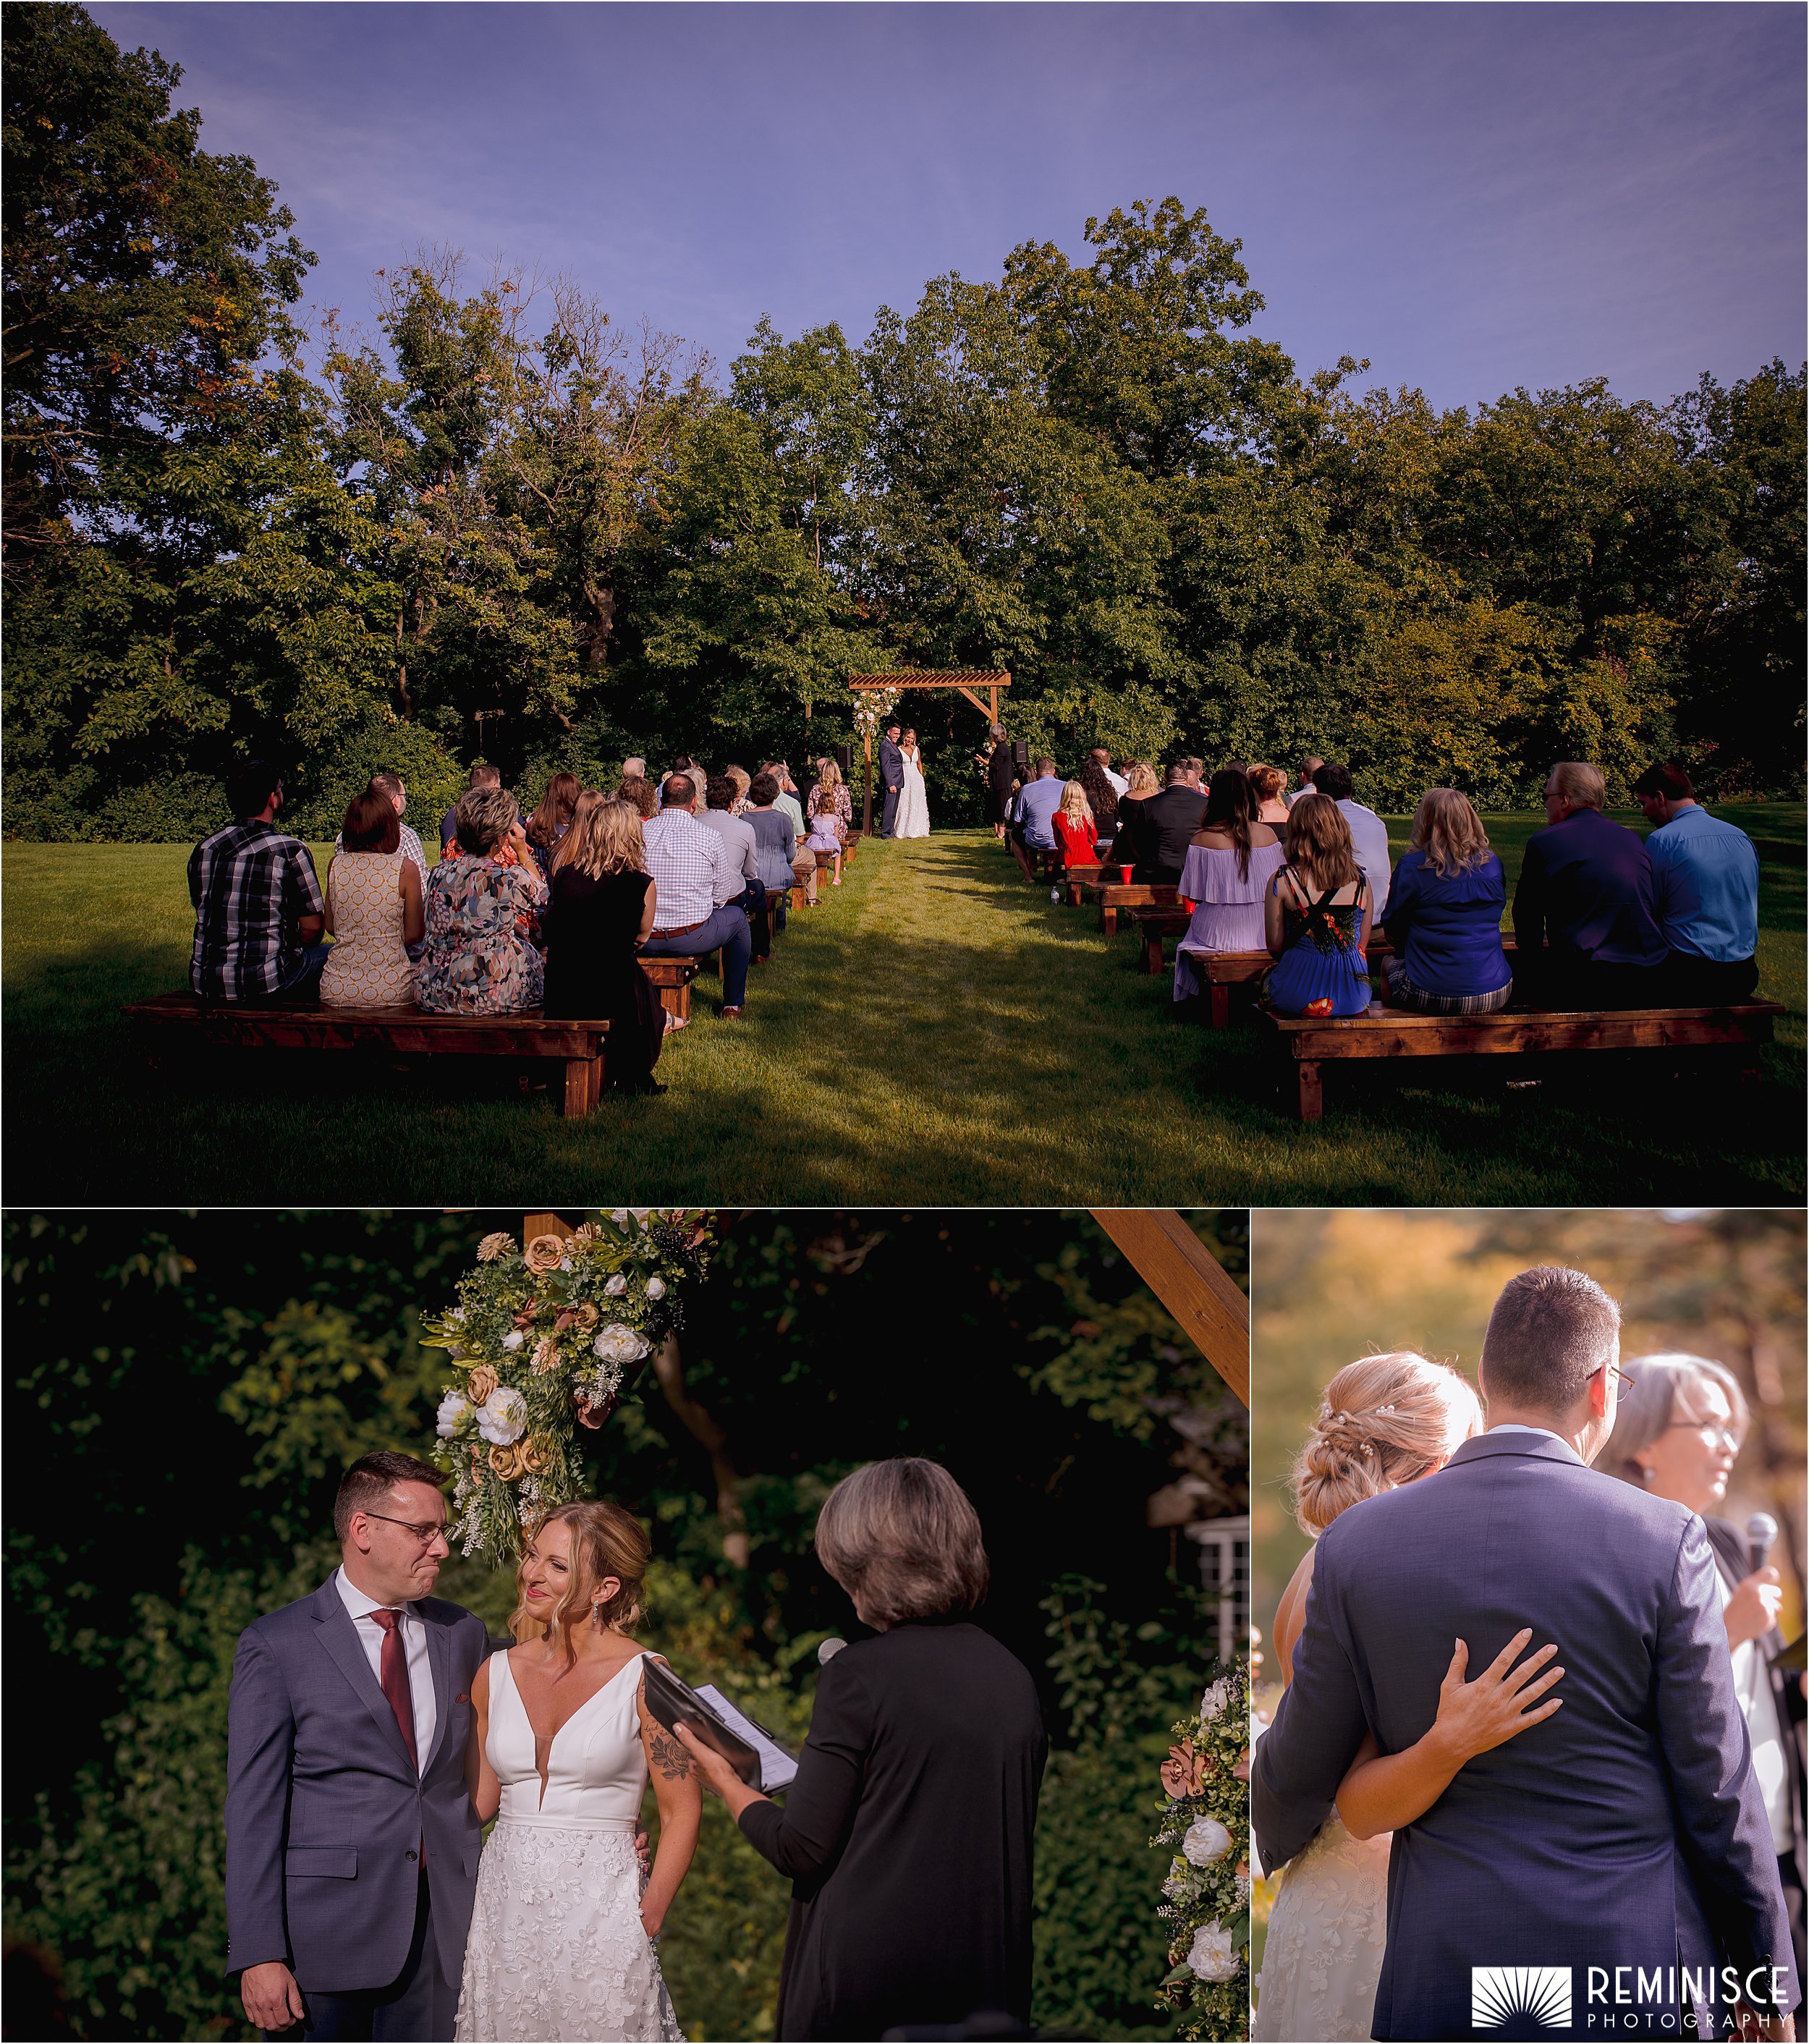 08-intimate-candid-backyard-summer-wedding-day.JPG